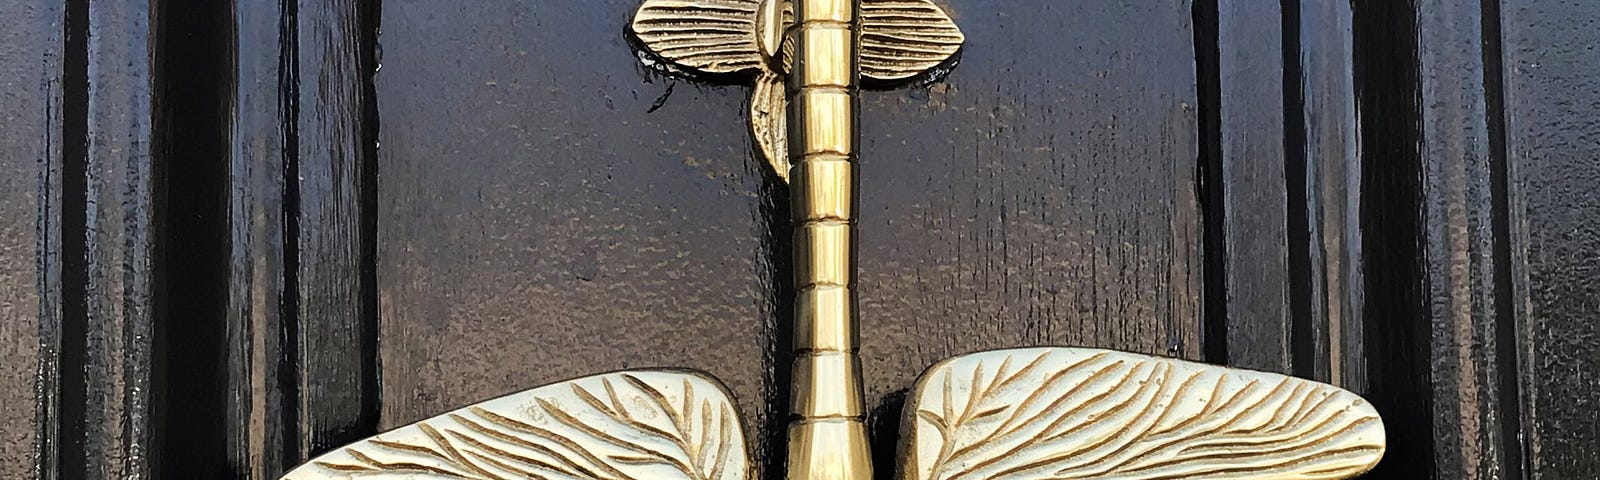 Dragonfly door knocker